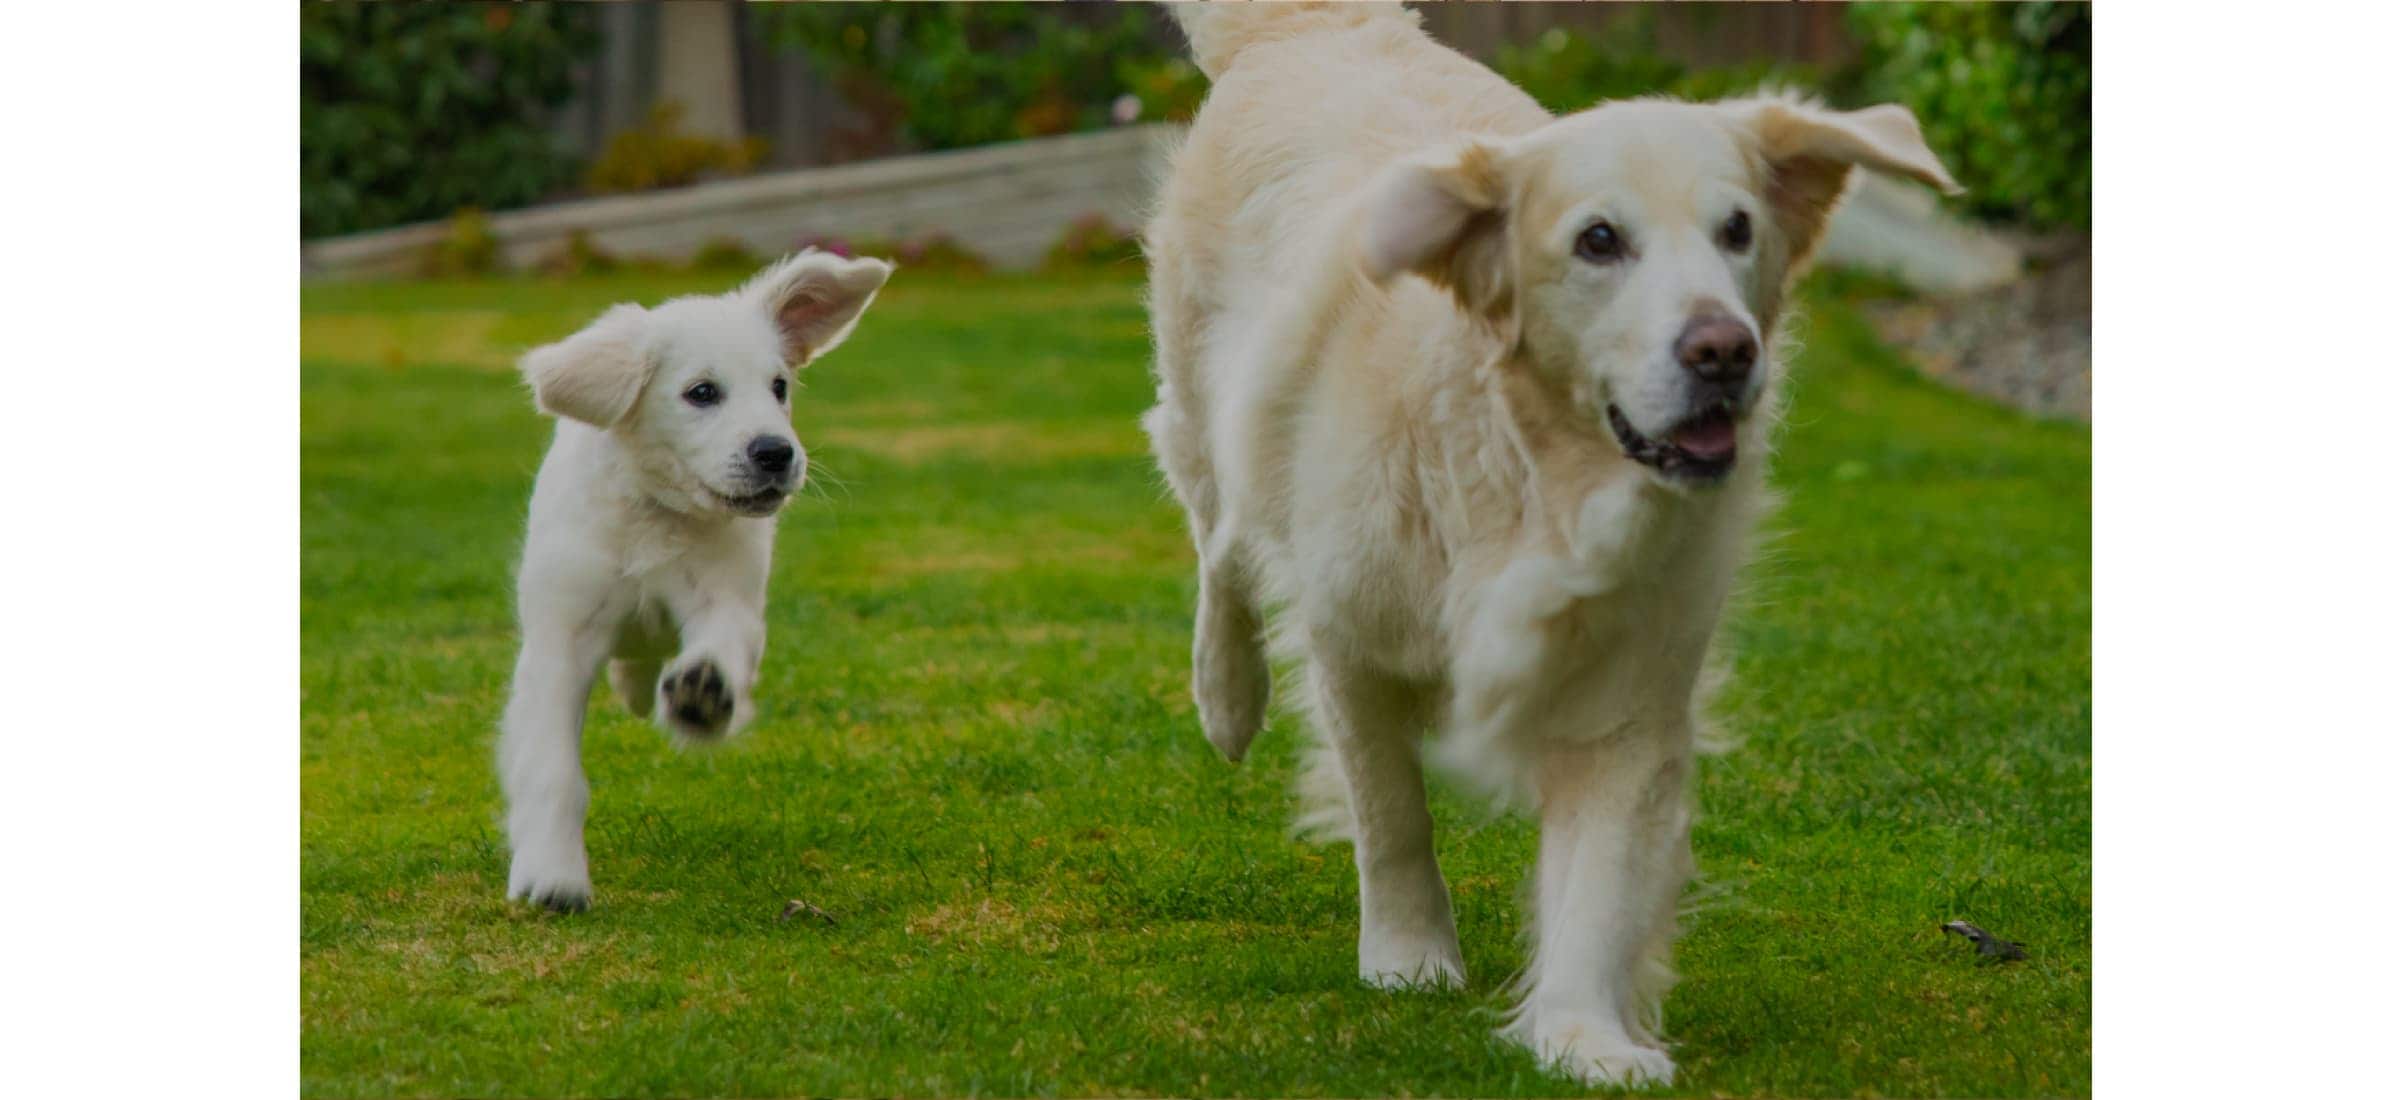 A golden retriever and its pup running across a green lawn.